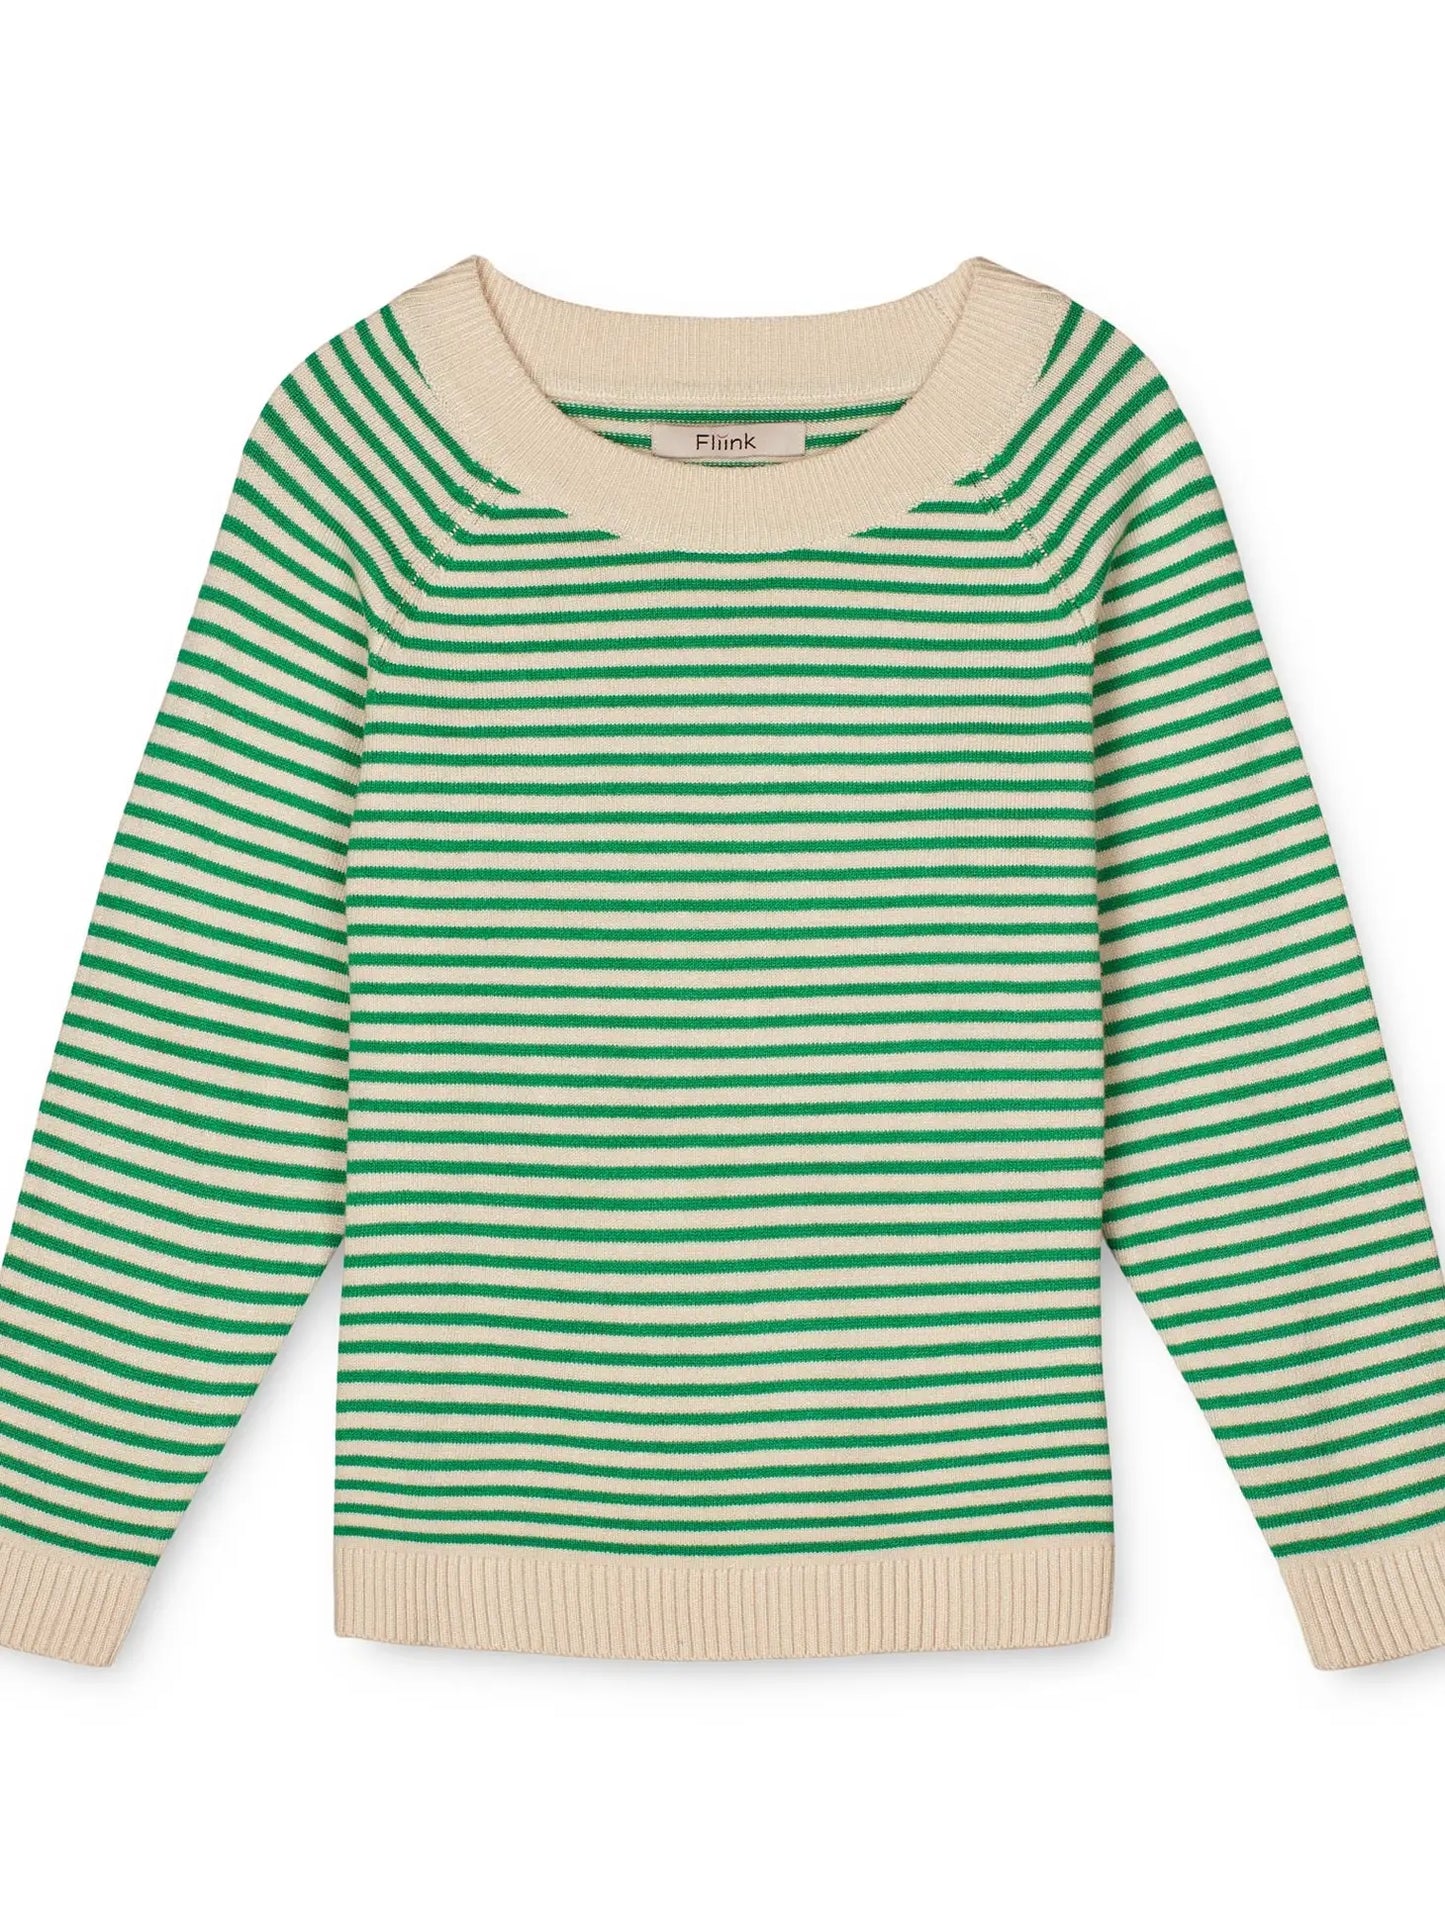 Favo Pullover - Jelly Bean Green Stripe